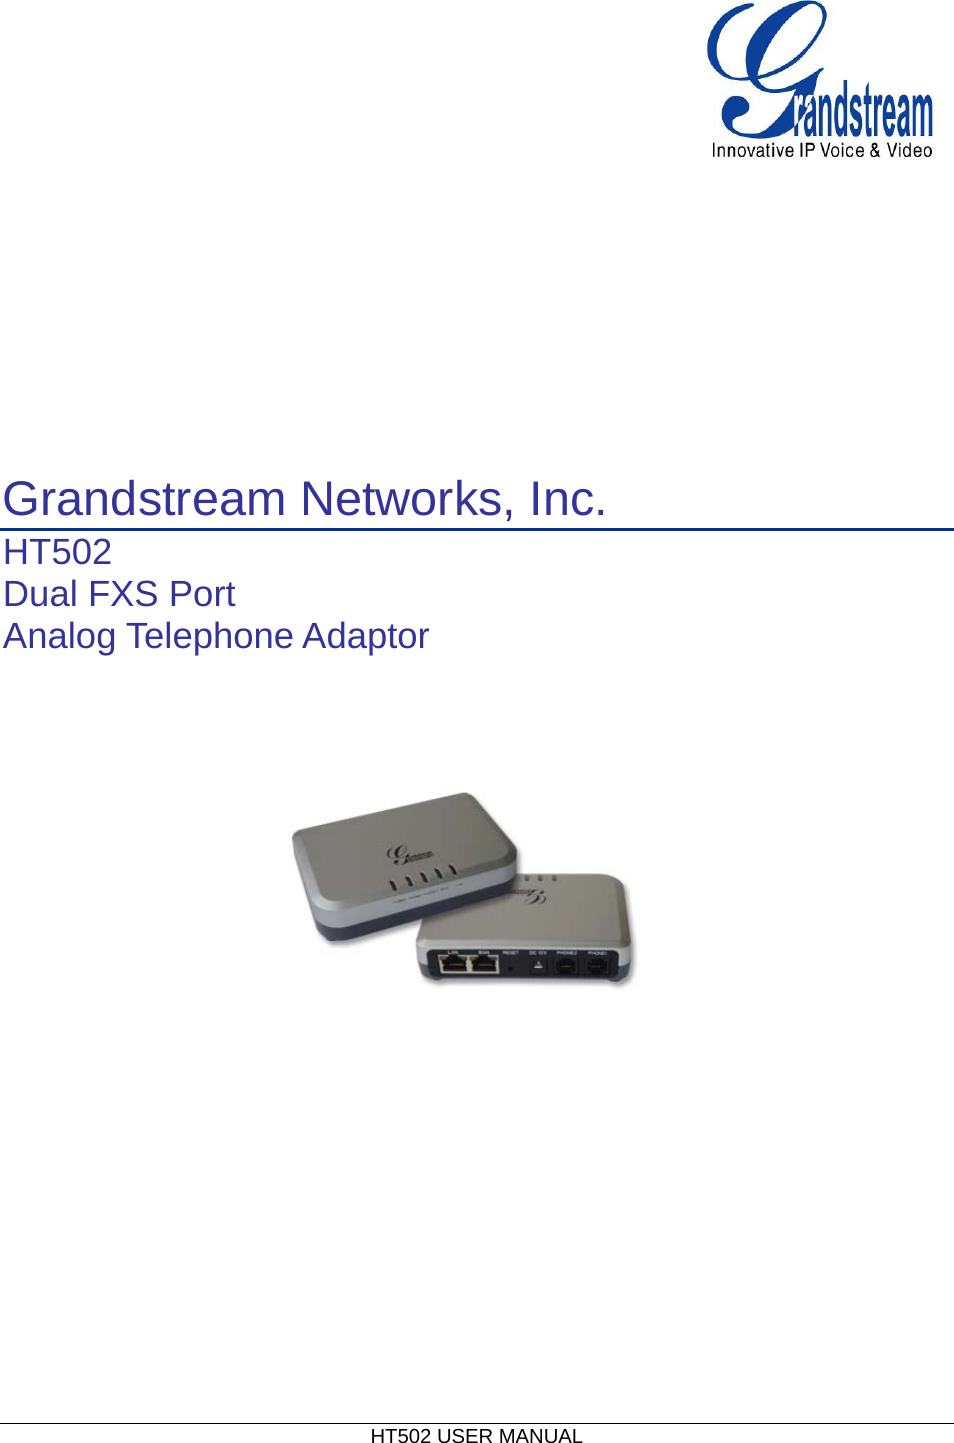  HT502 USER MANUAL           Grandstream Networks, Inc. HT502 Dual FXS Port  Analog Telephone Adaptor                     